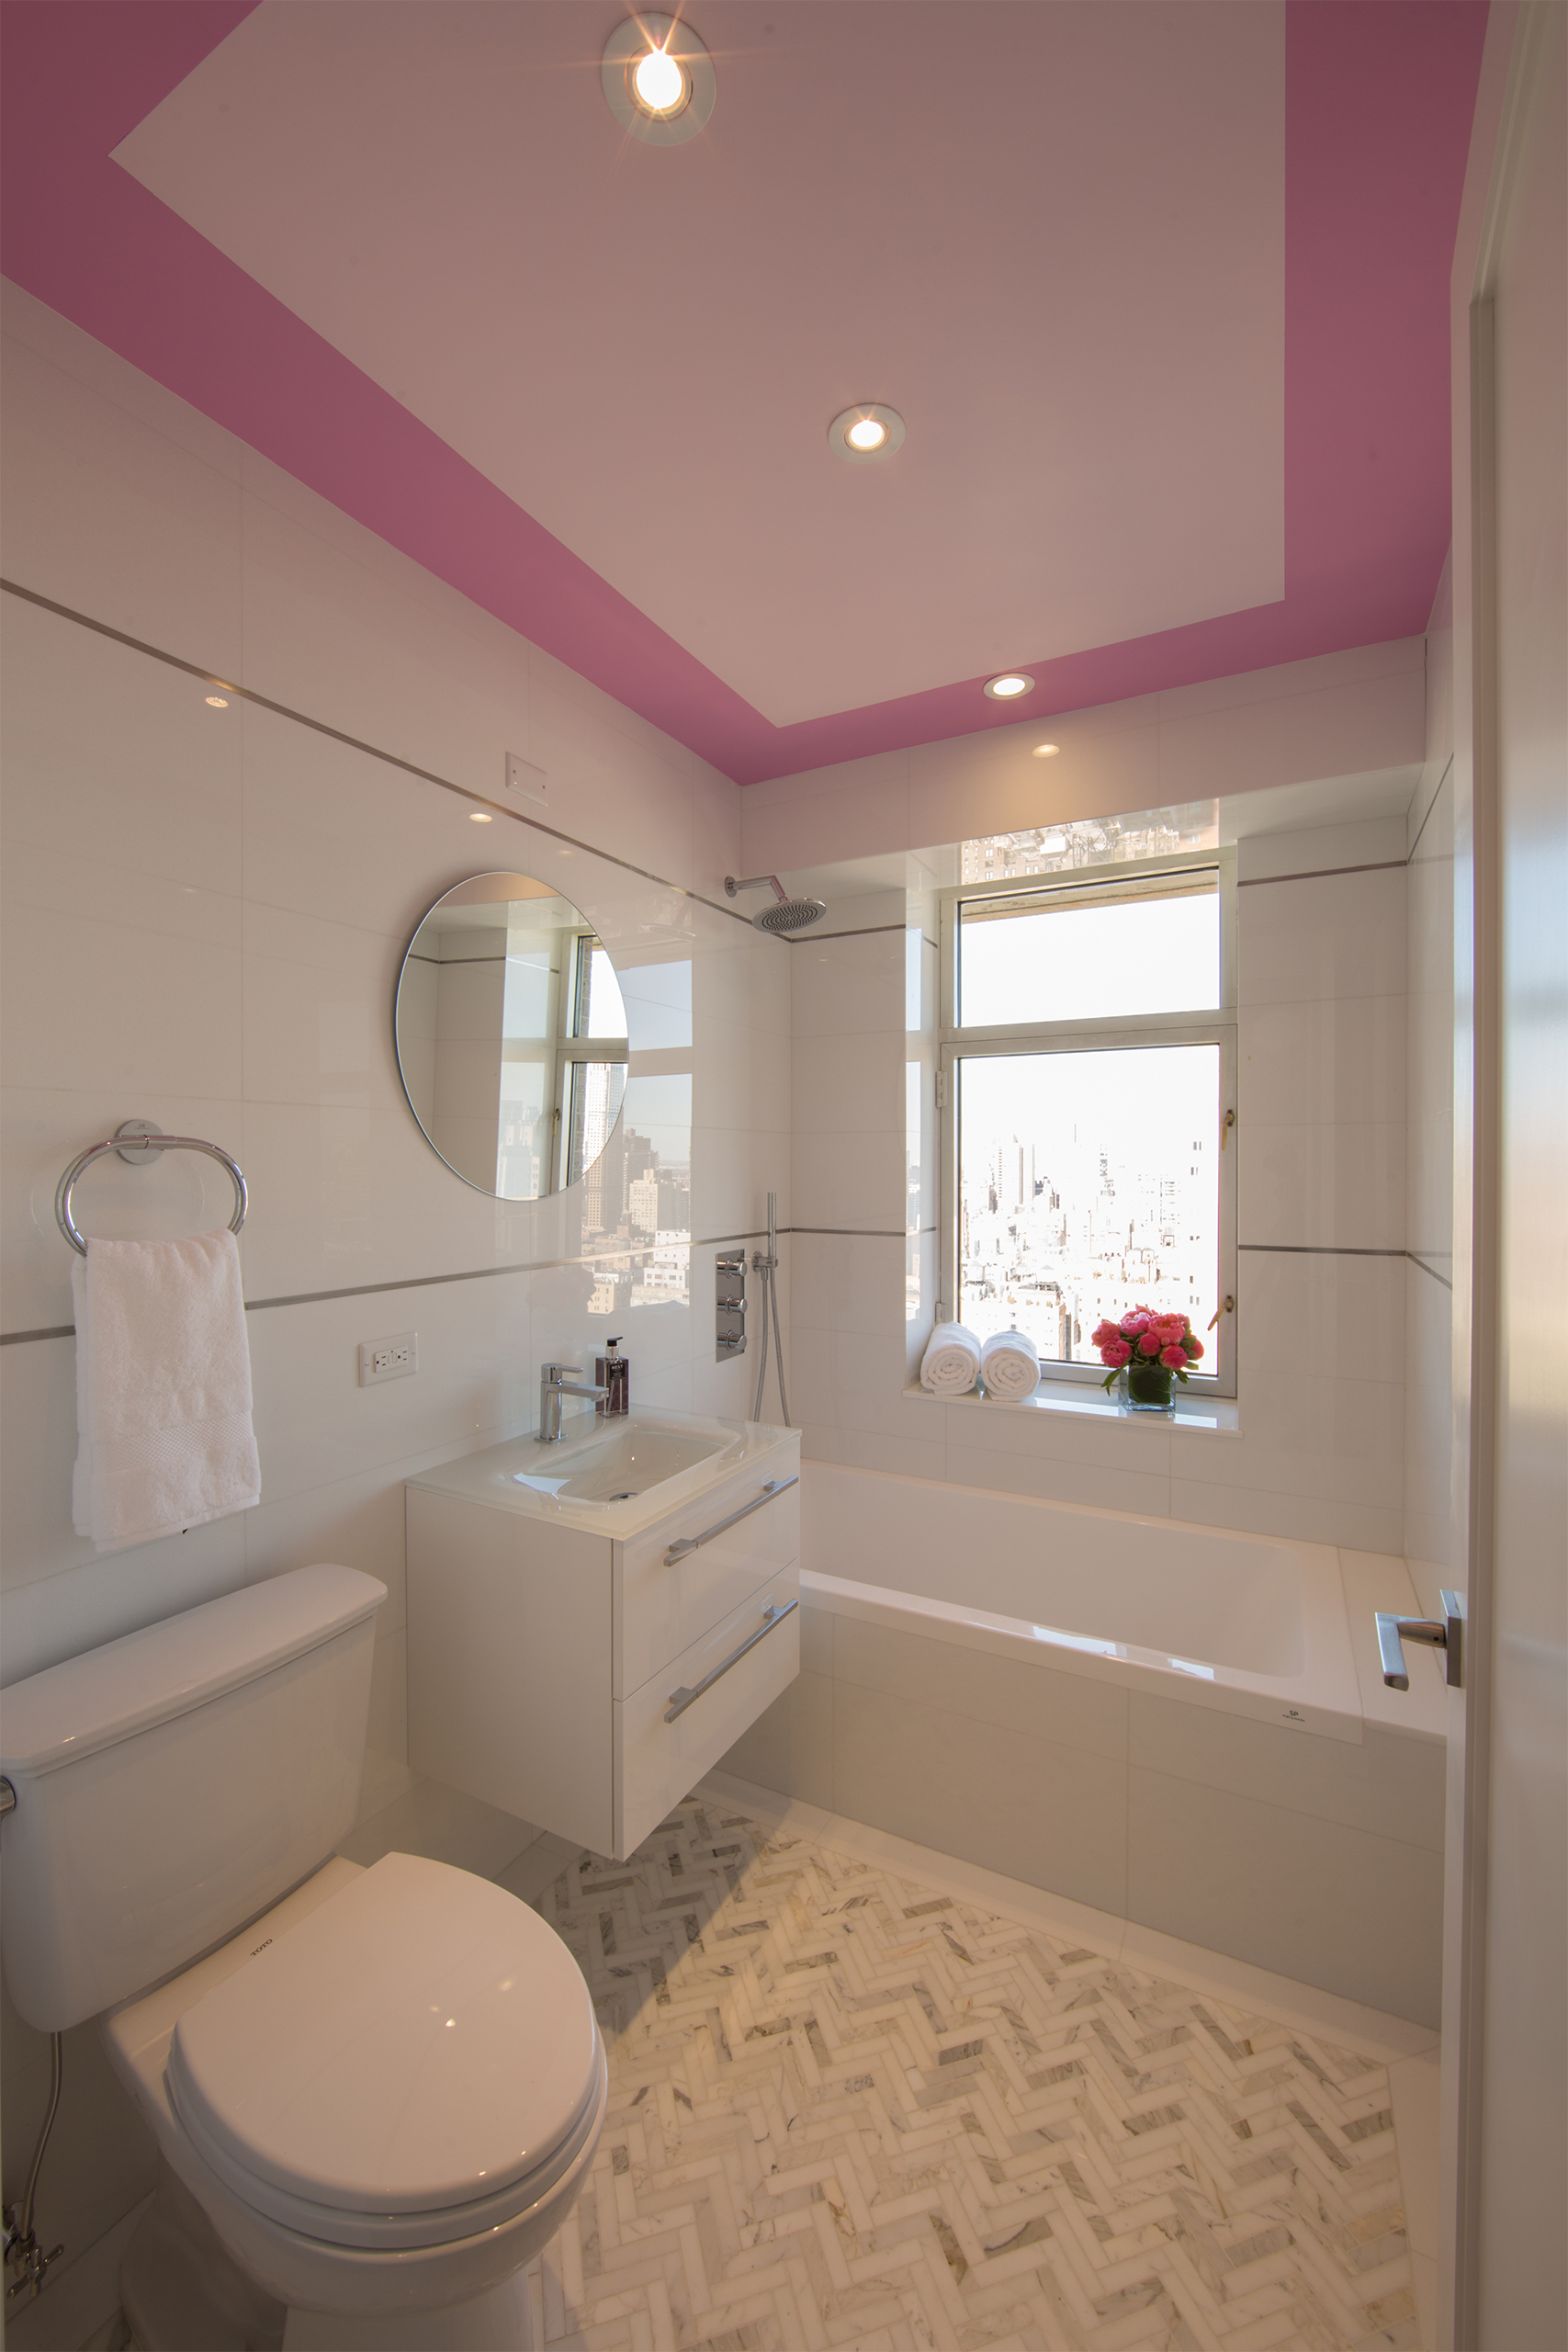 UES New York Residence - Bathroom Renovations 2